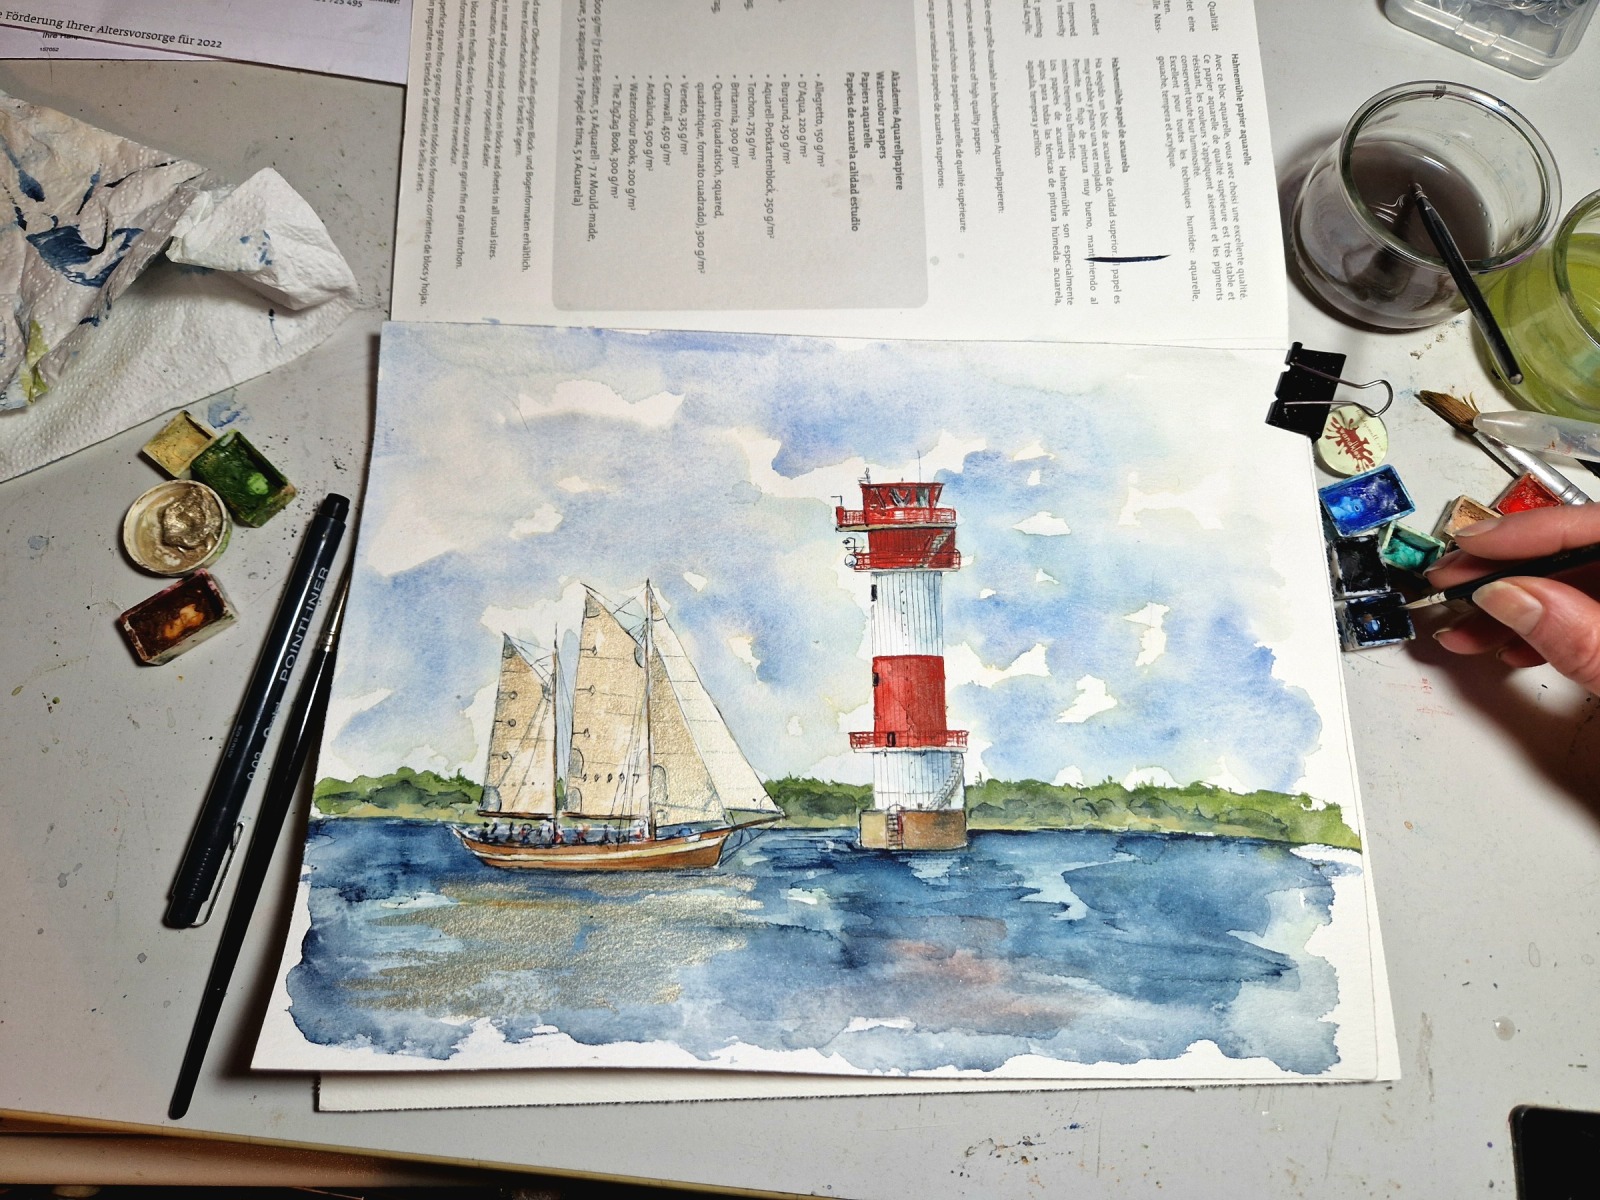 Leuchtturm Kalkgrund Flensburger Förde mit Segelschiff Illustration gerahmte Originalarbeit Mixed